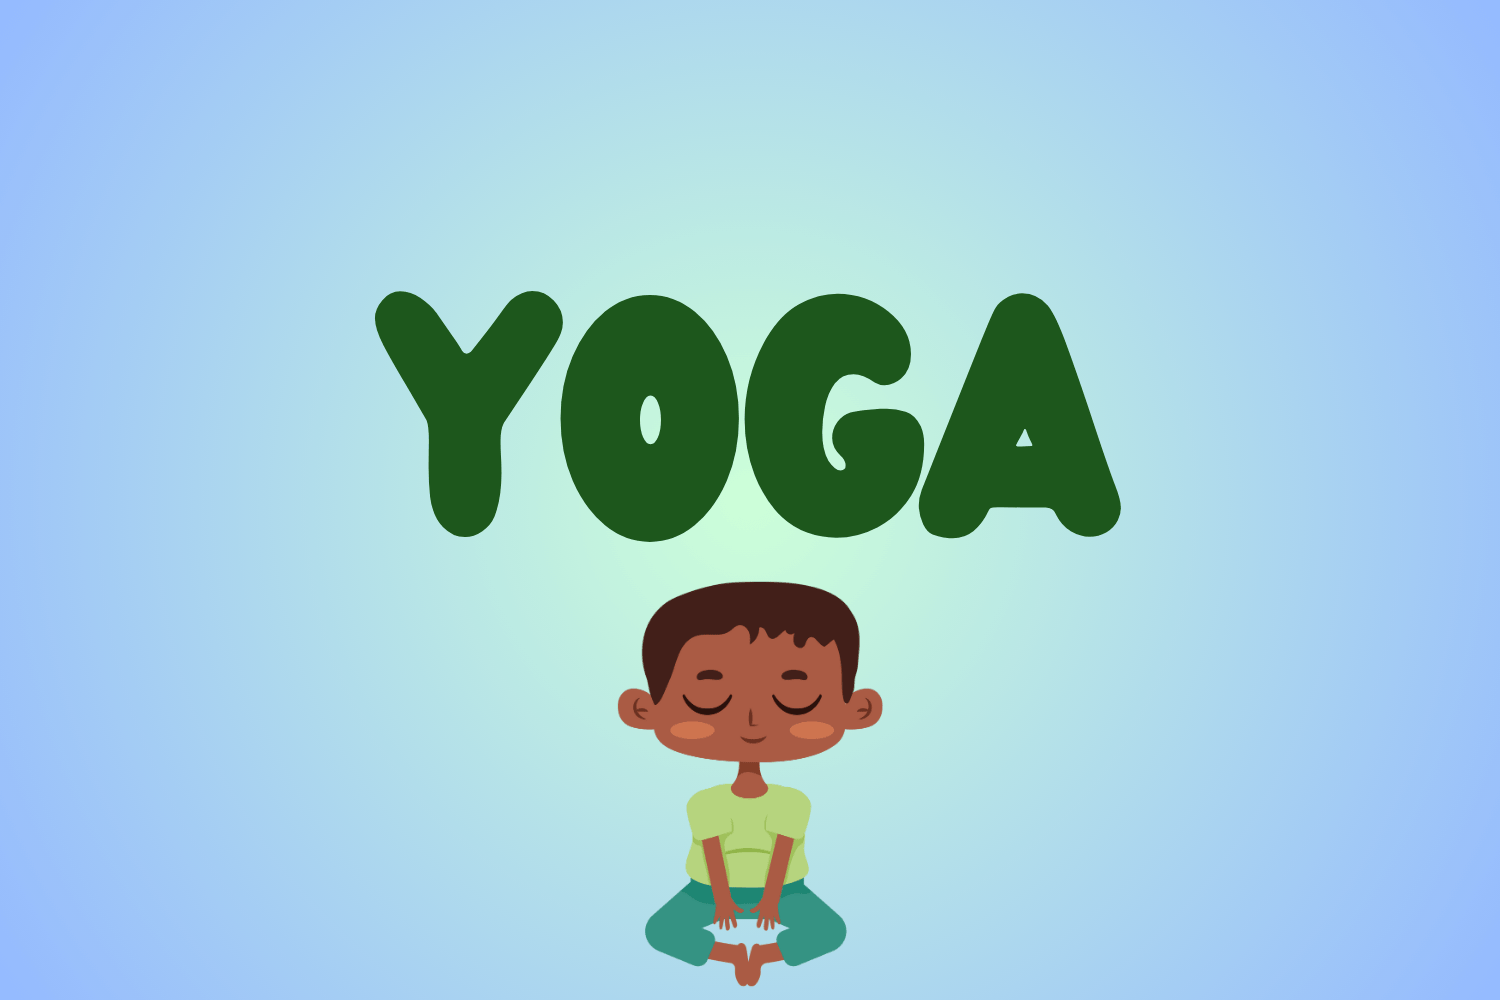 Image that says "yoga"